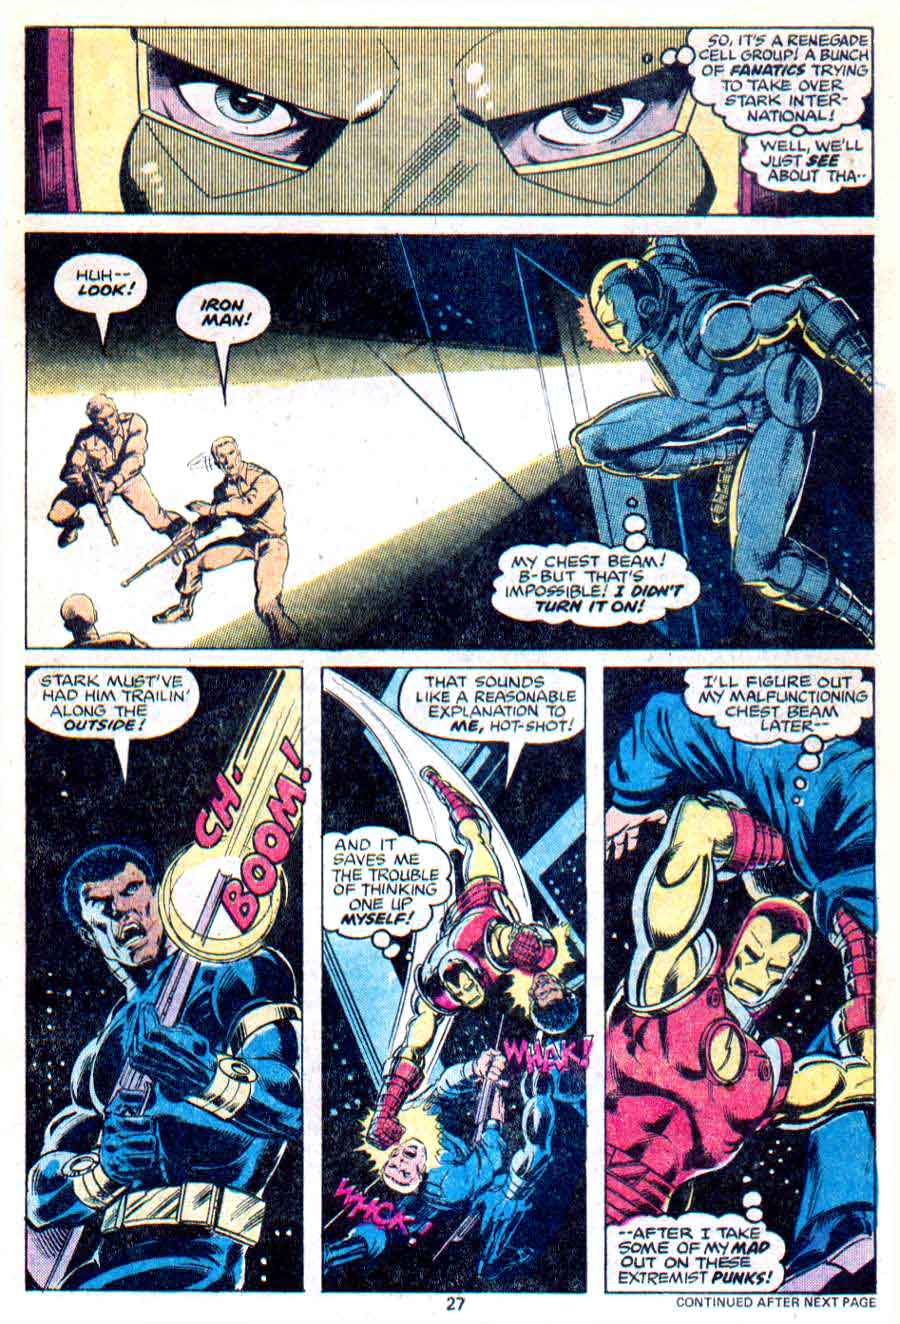 Iron Man v1 #118 marvel comic book page art by John Byrne